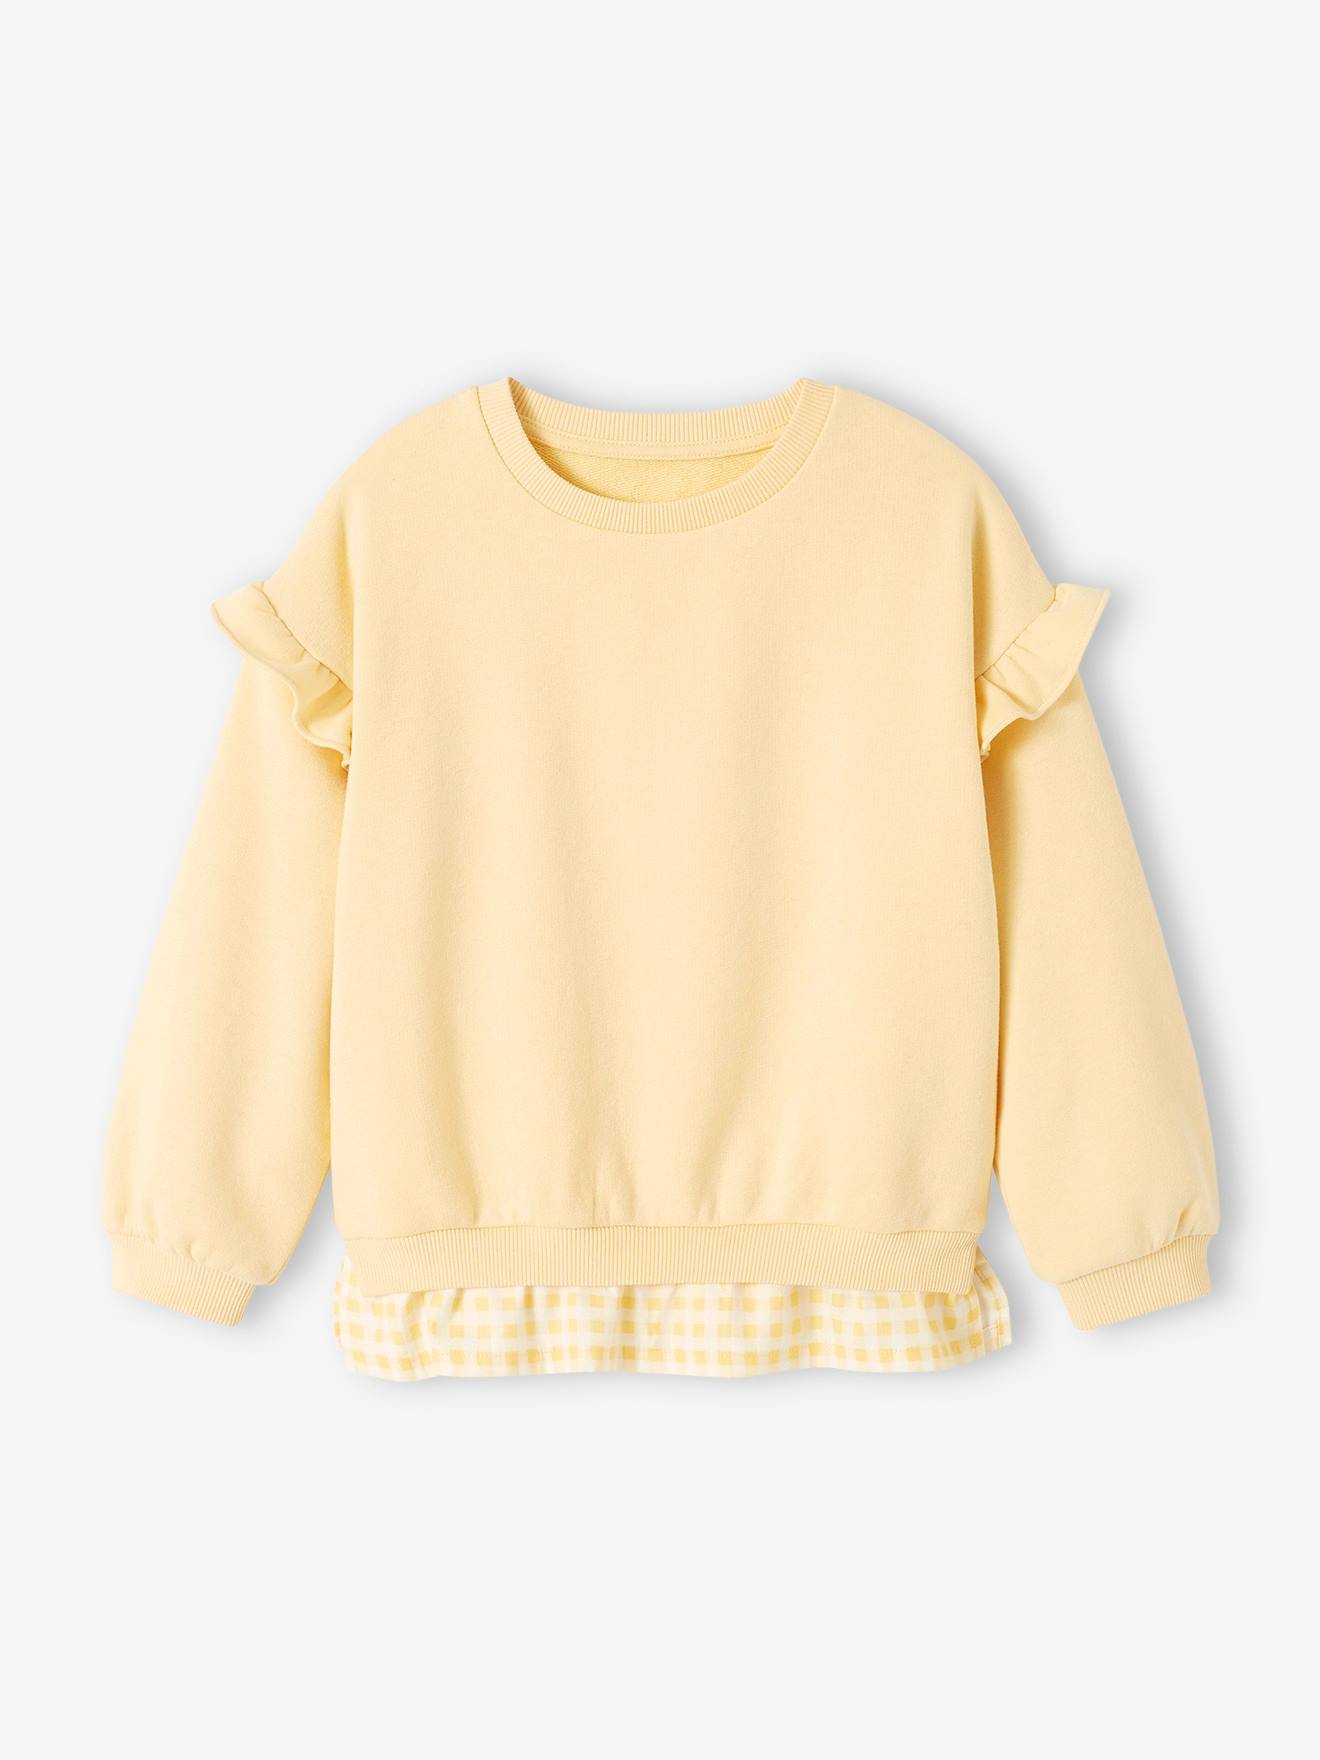 Dual Fabric Sweatshirt with Ruffles for Girls pastel yellow